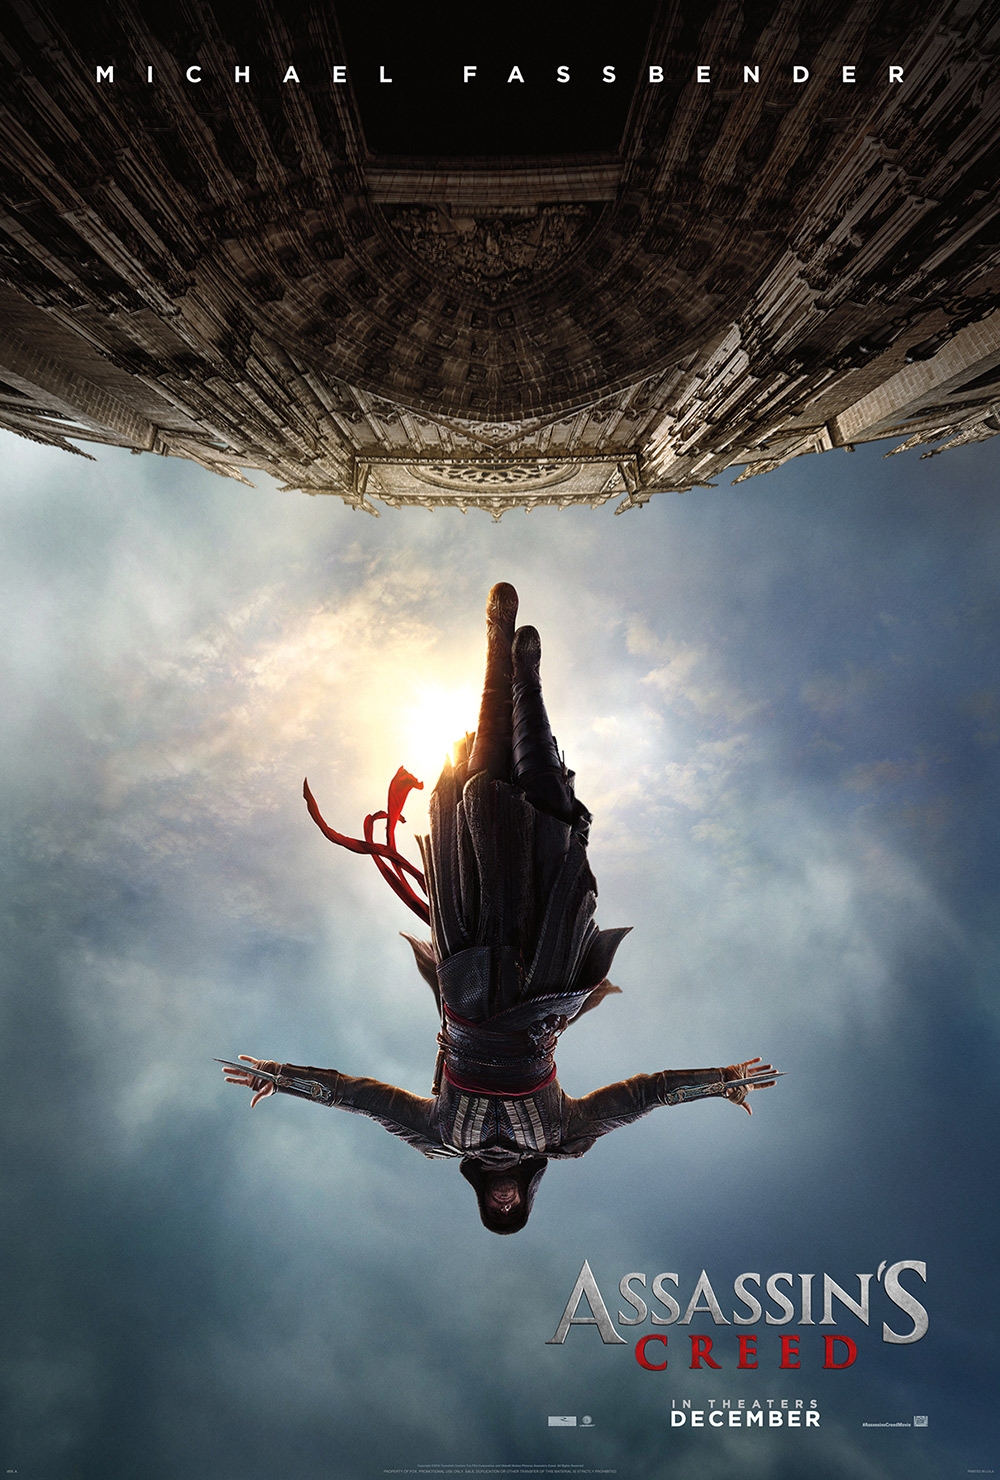 Изображение с име: Assassins-Creed-Movie-Poster